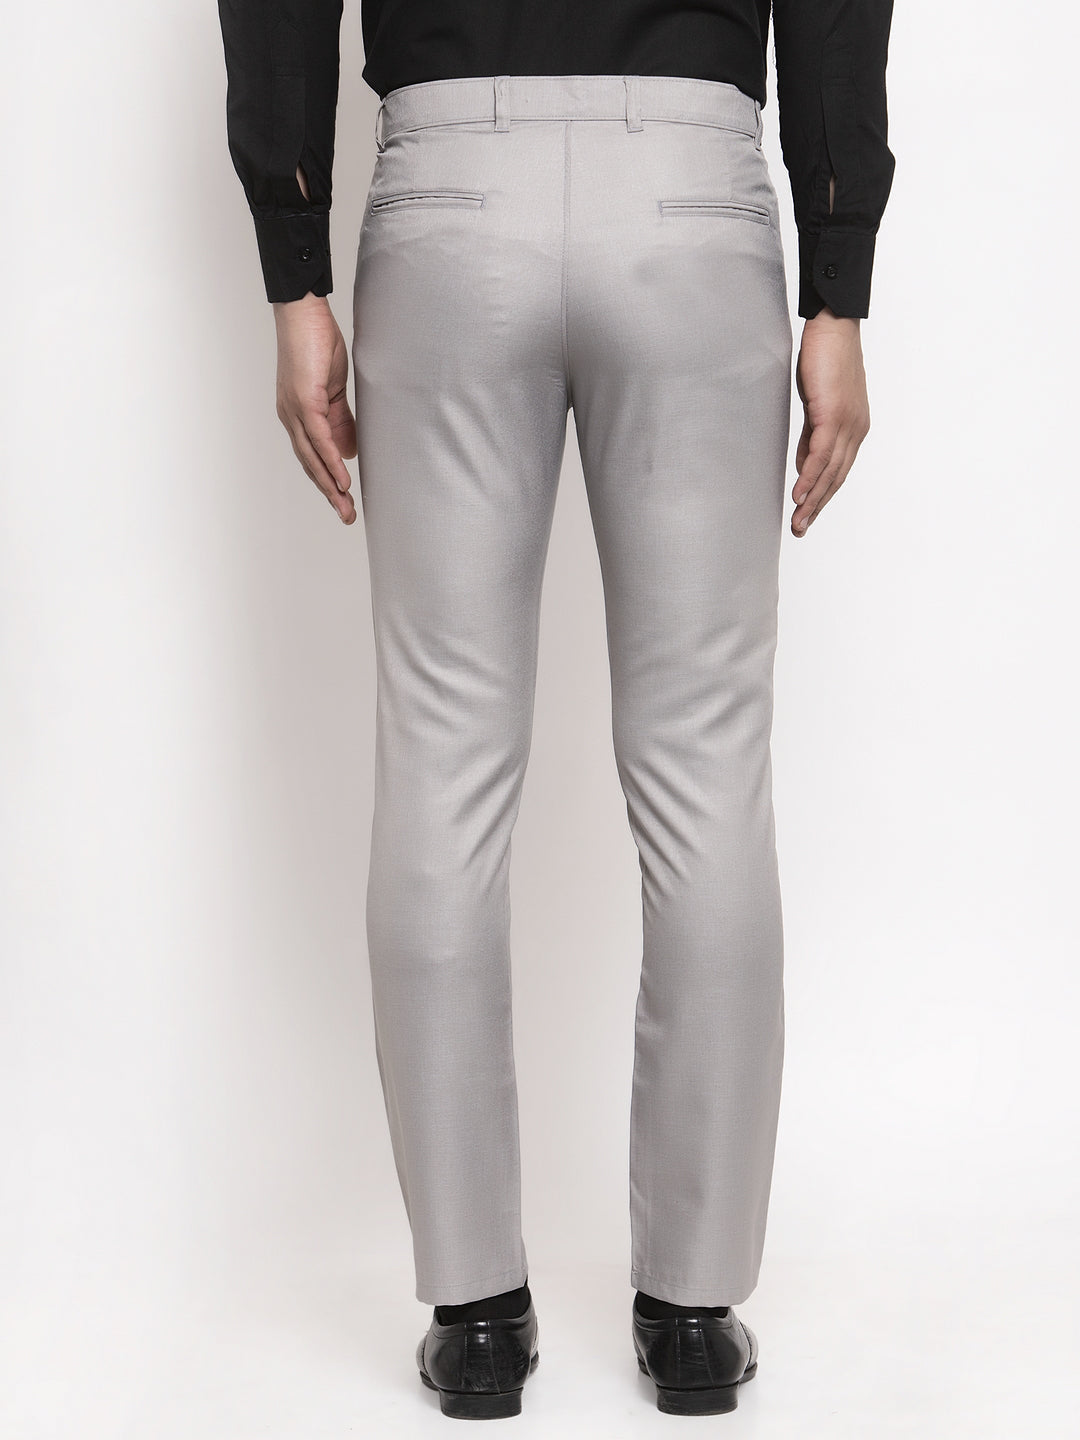 Men's Grey Cotton Solid Formal Trousers ( FGP 258Light-Grey ) - Jainish